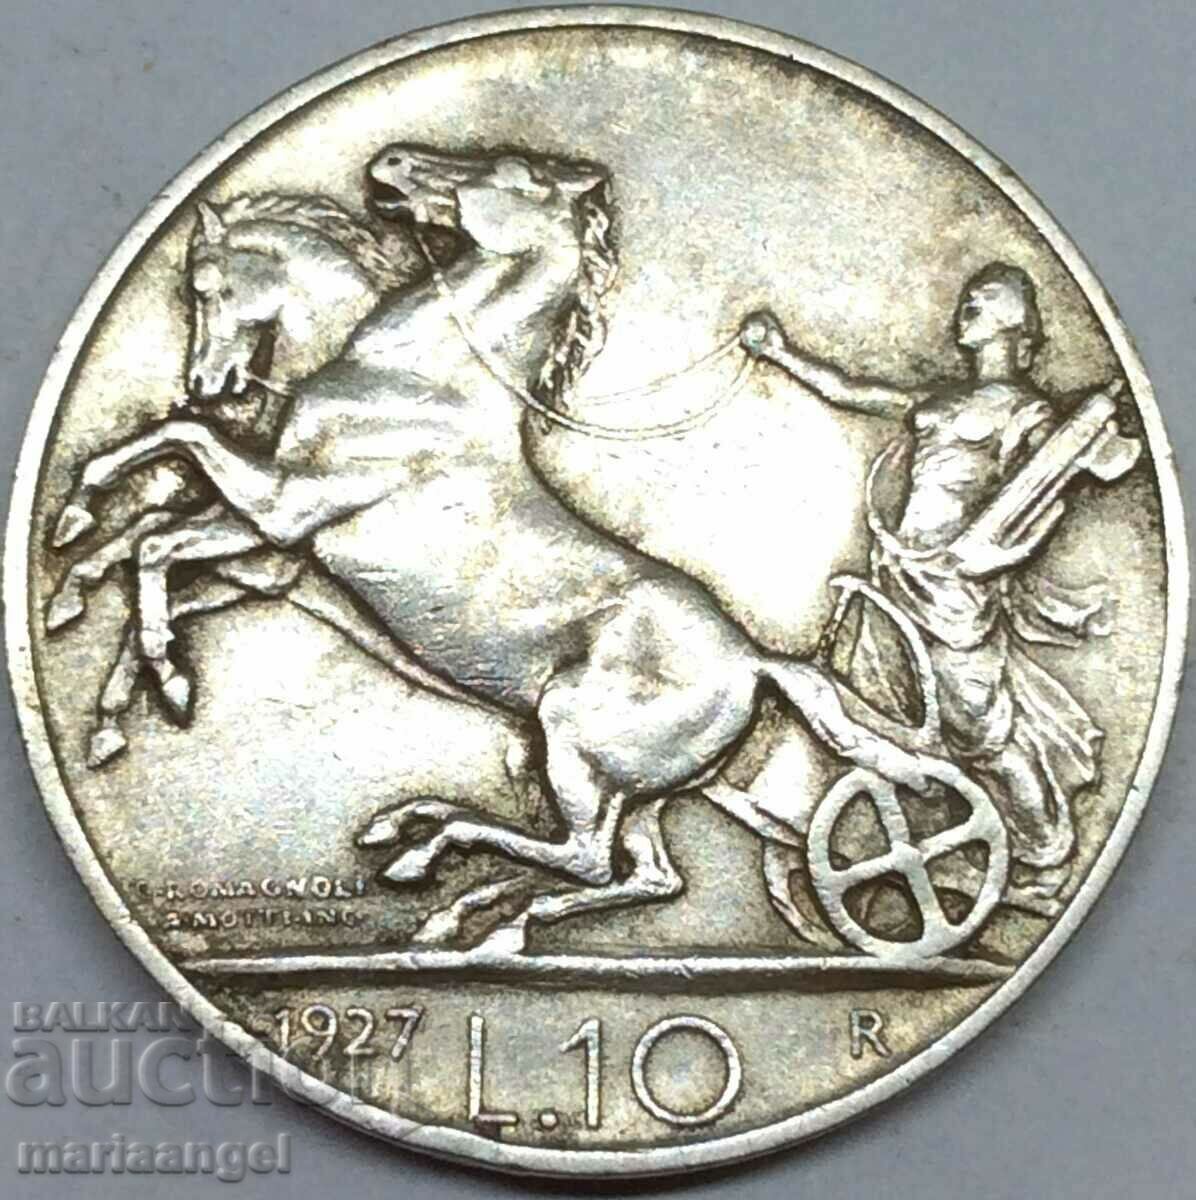 10 лири 1927 Италия FERT** Виктор Емануел сребро